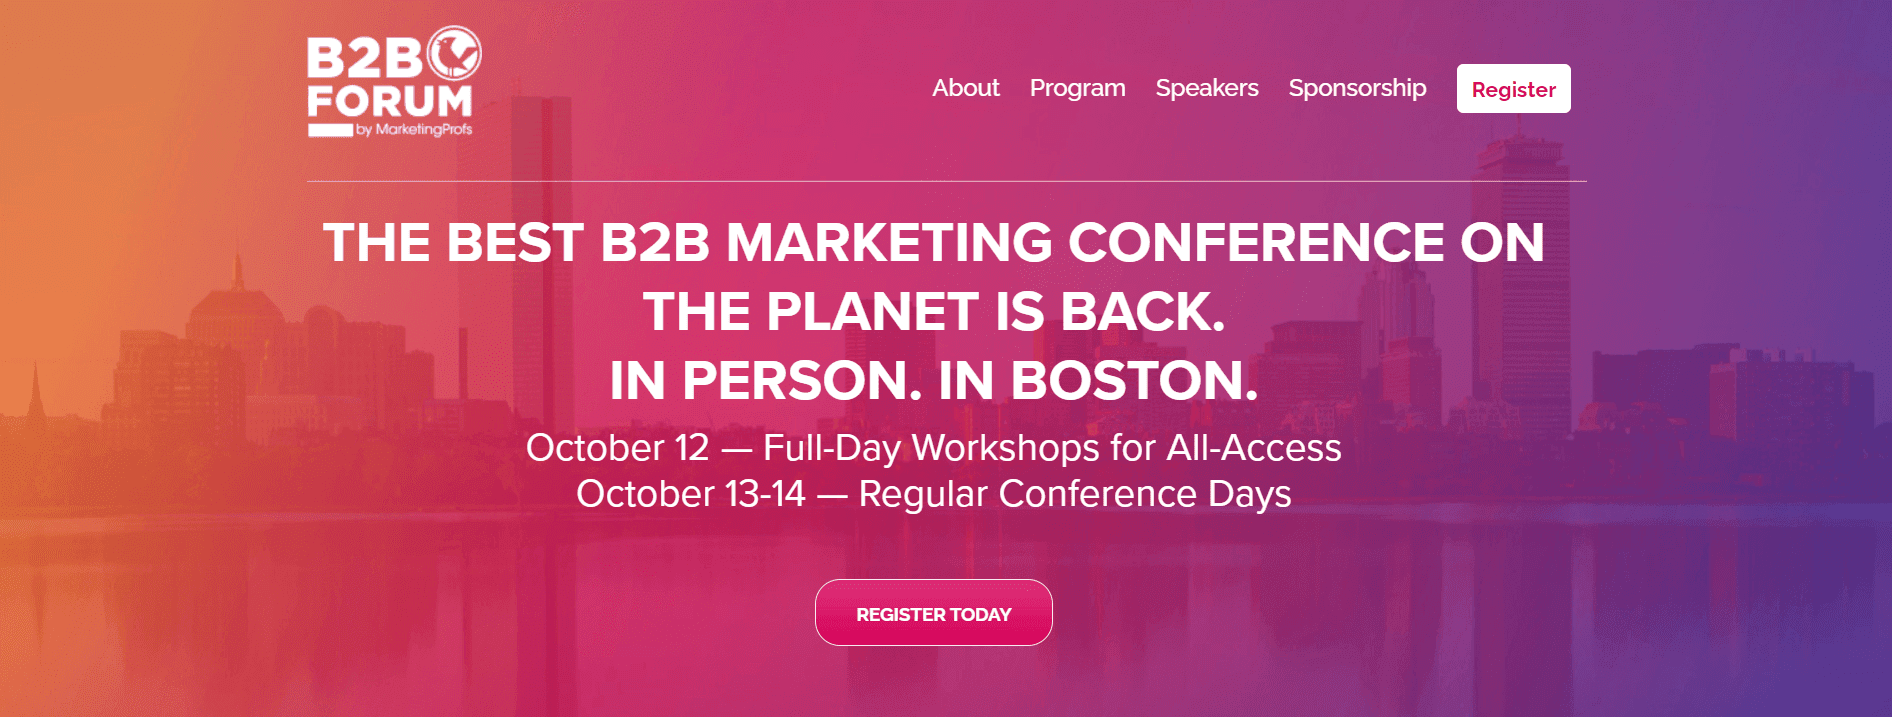 B2B Digital Marketing Conference